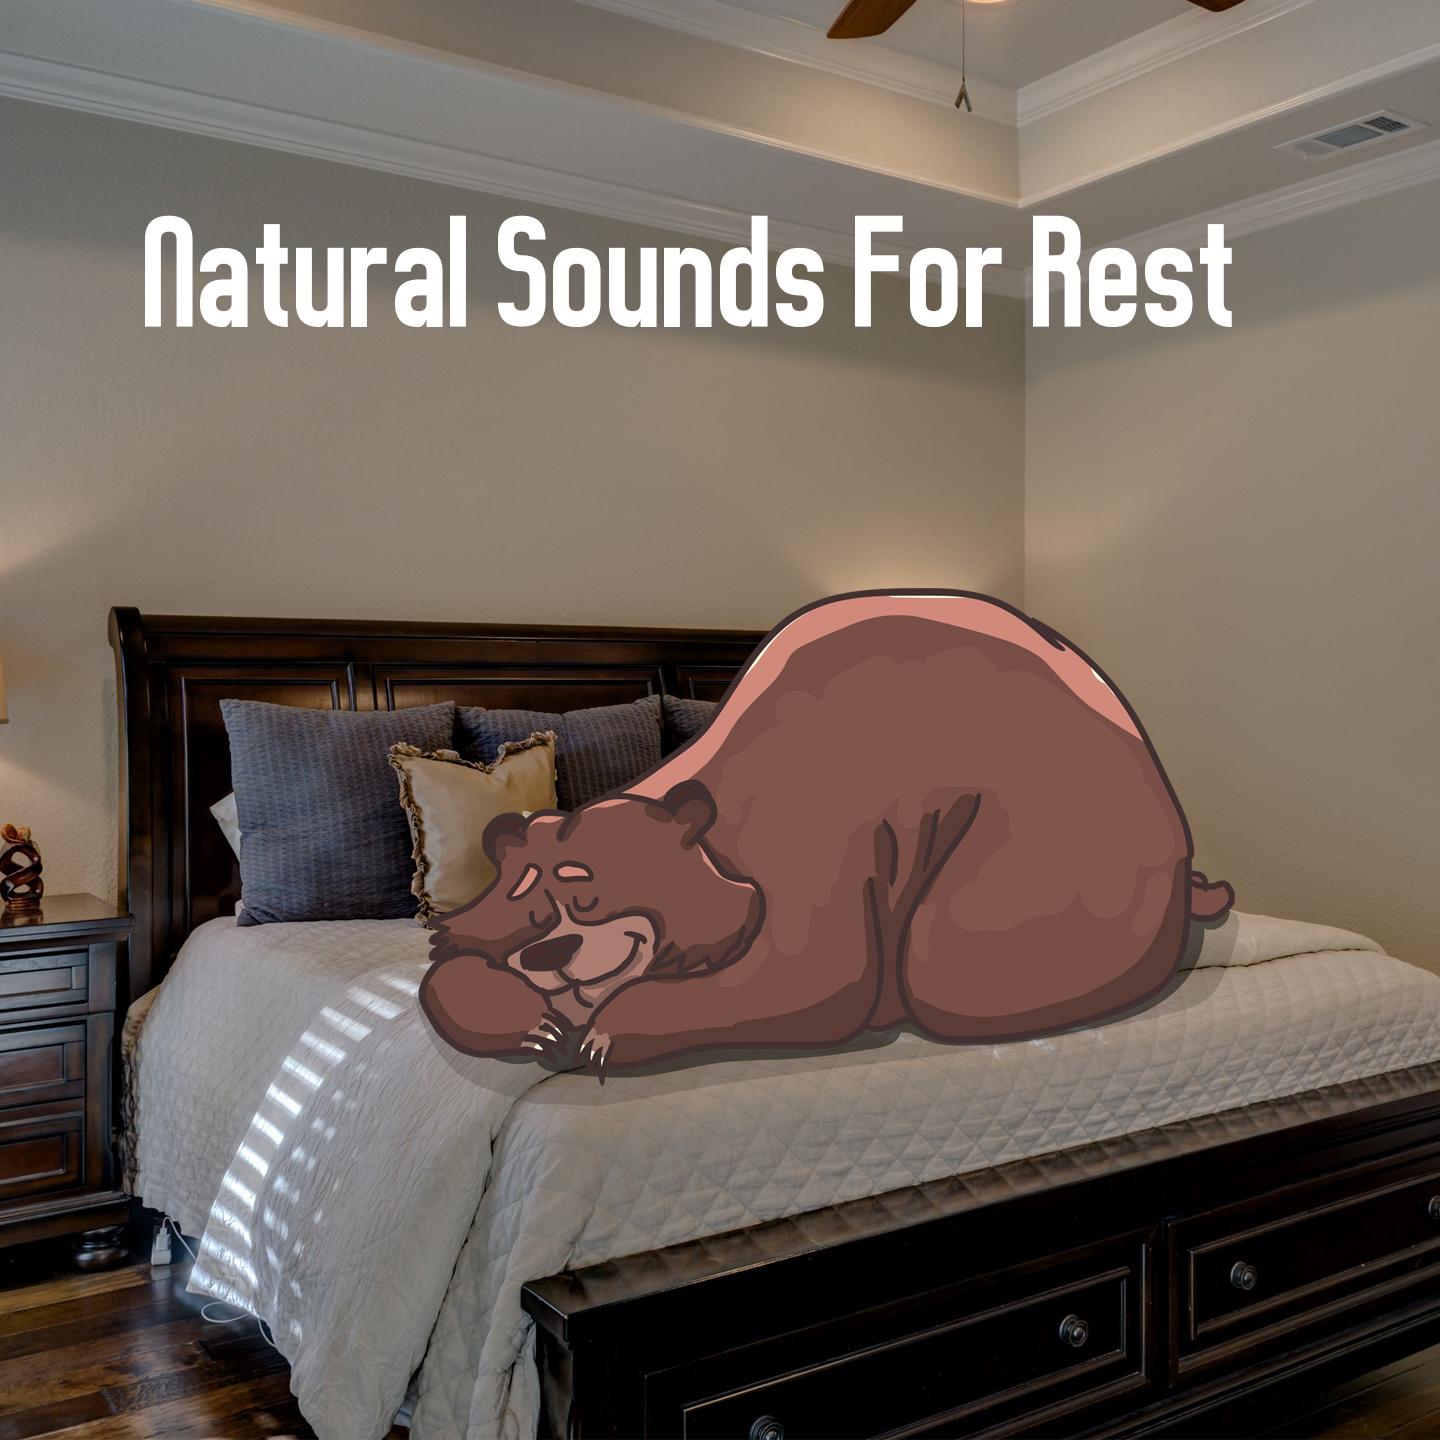 Natural Sounds For Rest